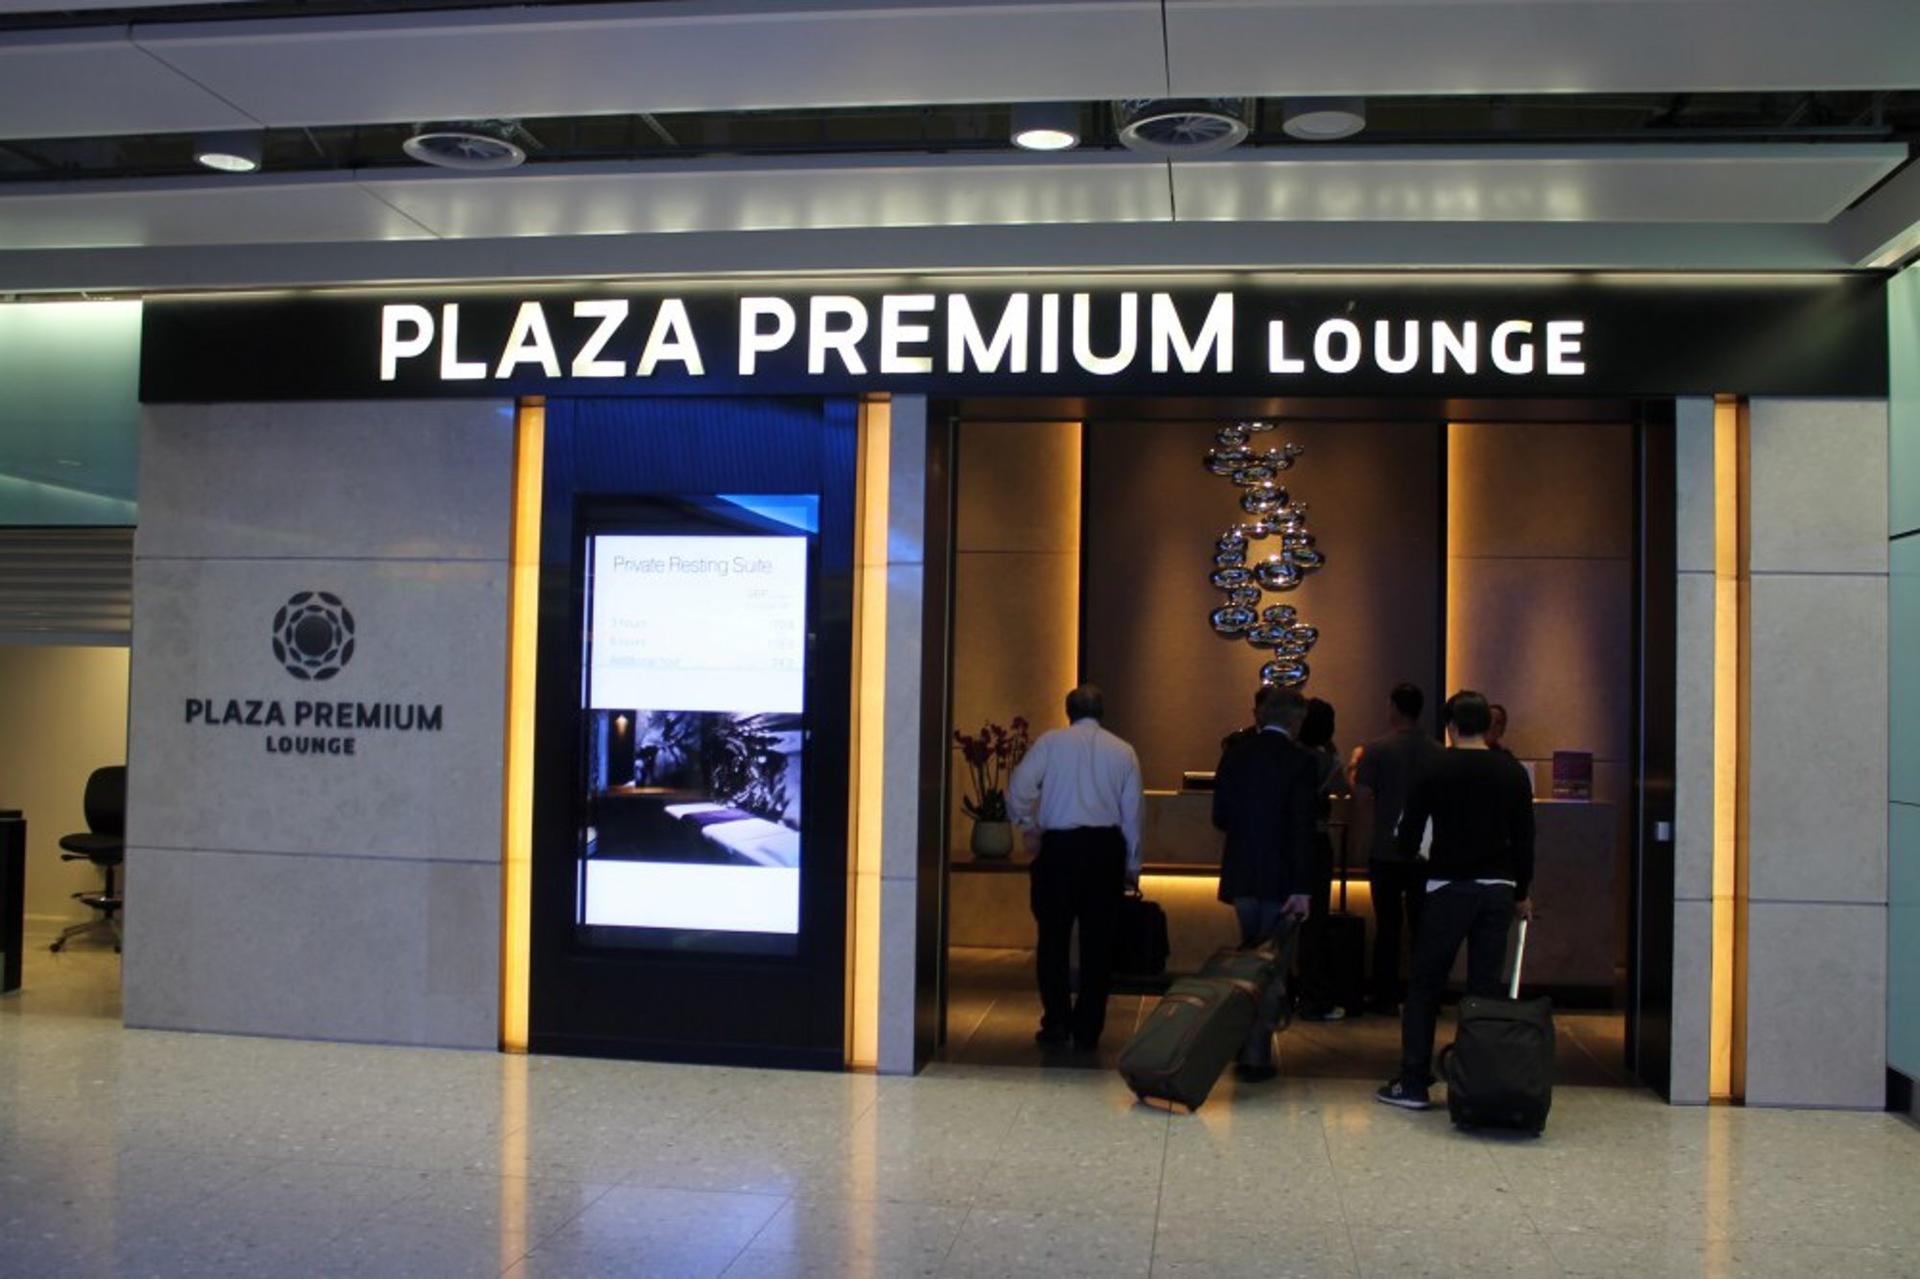 Plaza Premium Lounge image 55 of 73